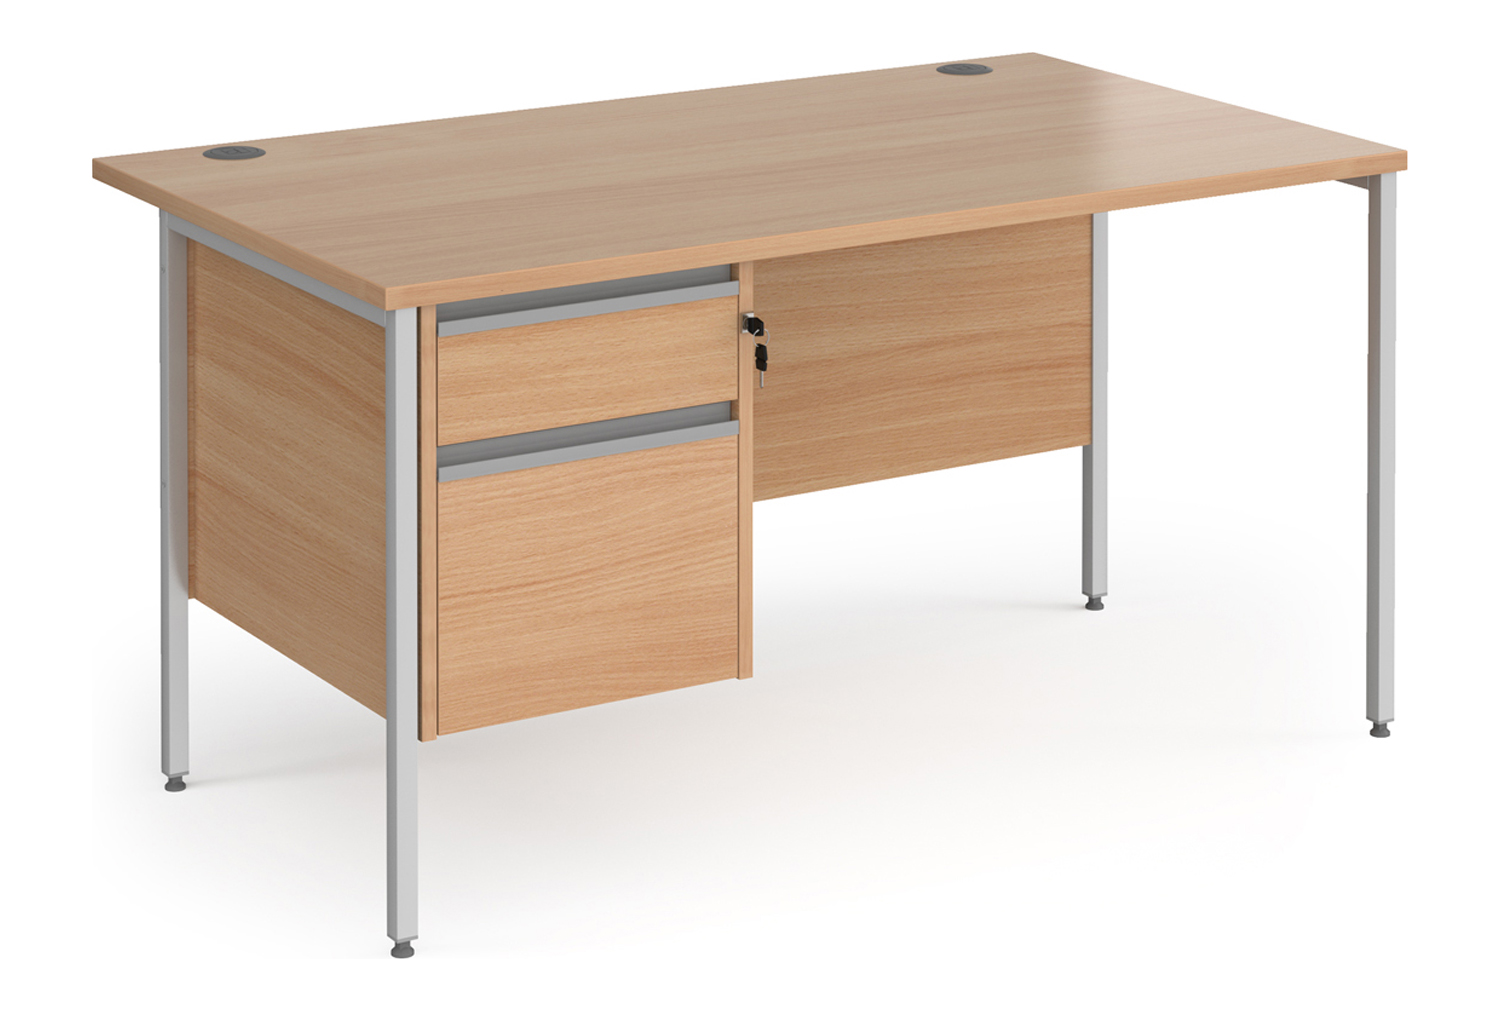 Value Line Classic+ Rectangular H-Leg Office Desk 2 Drawers (Silver Leg), 140wx80dx73h (cm), Beech, Fully Installed